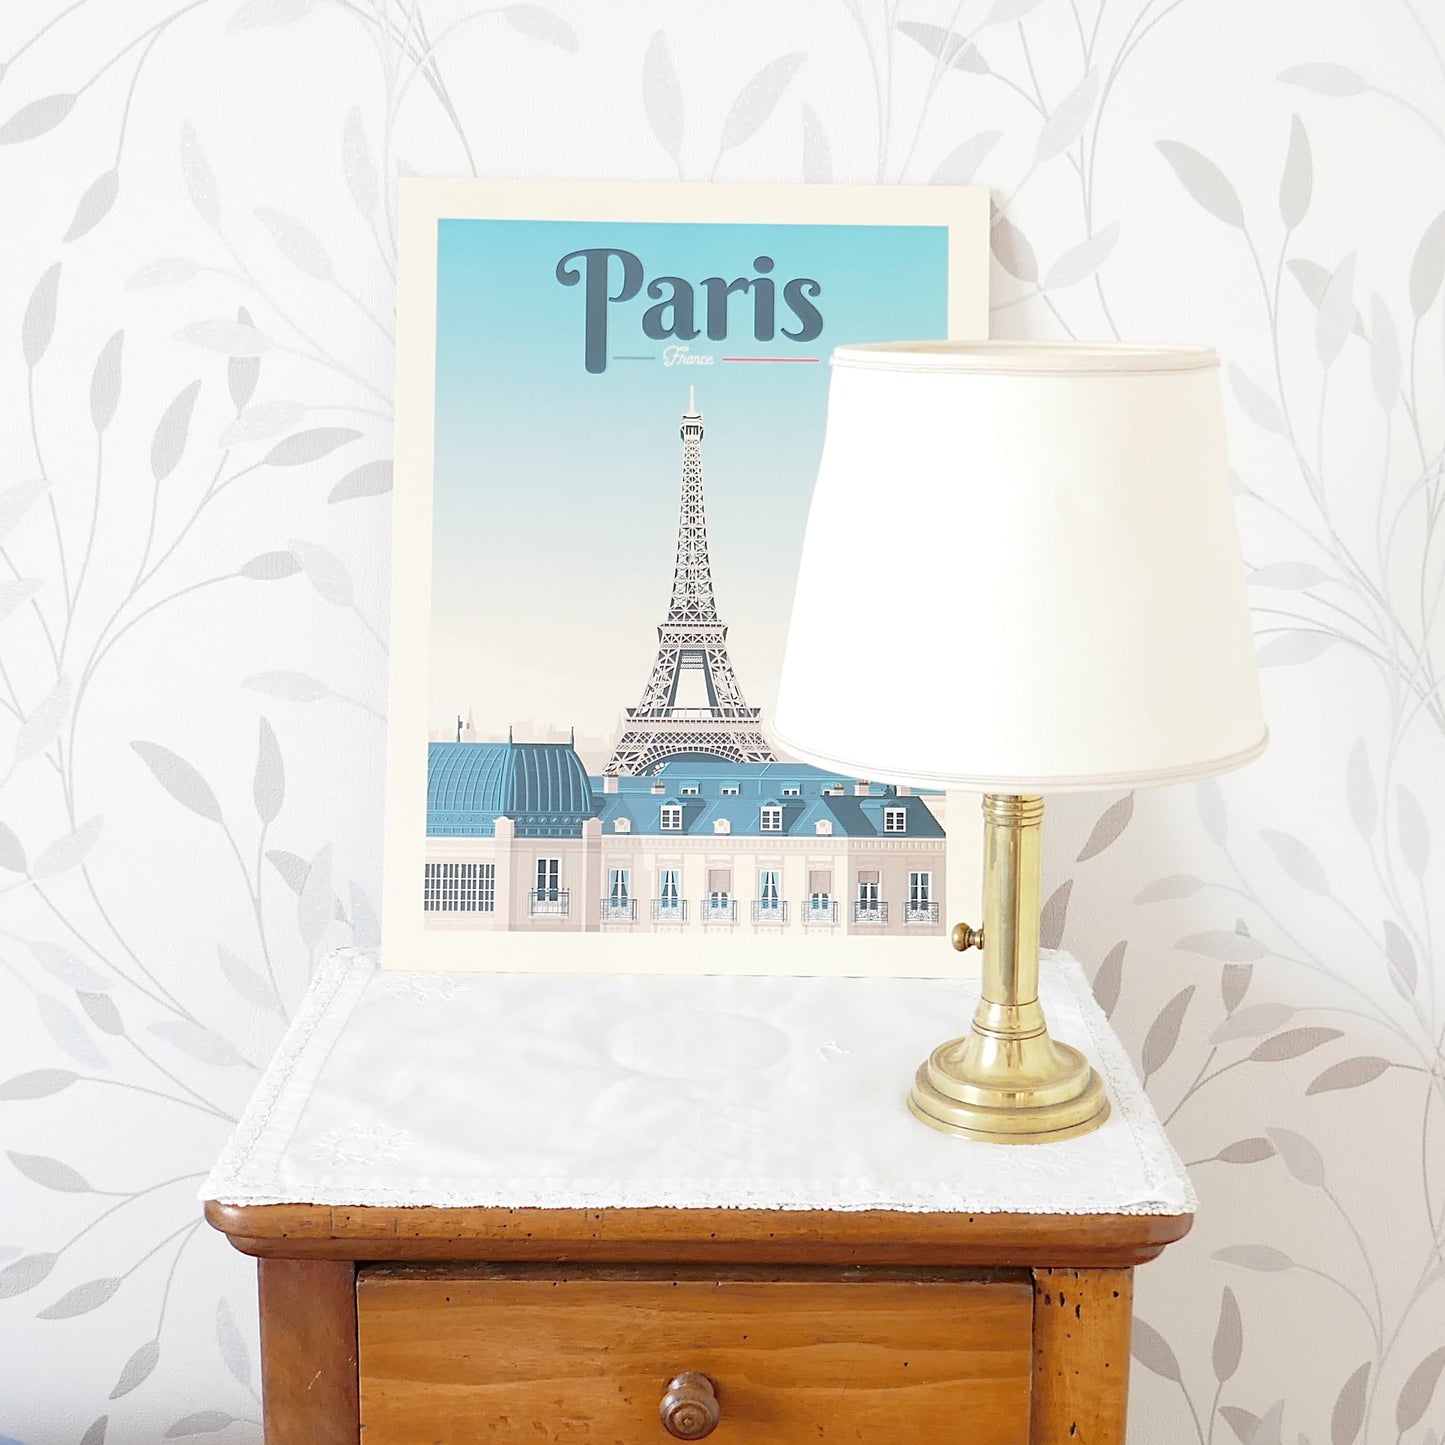 Paris poster - French Address